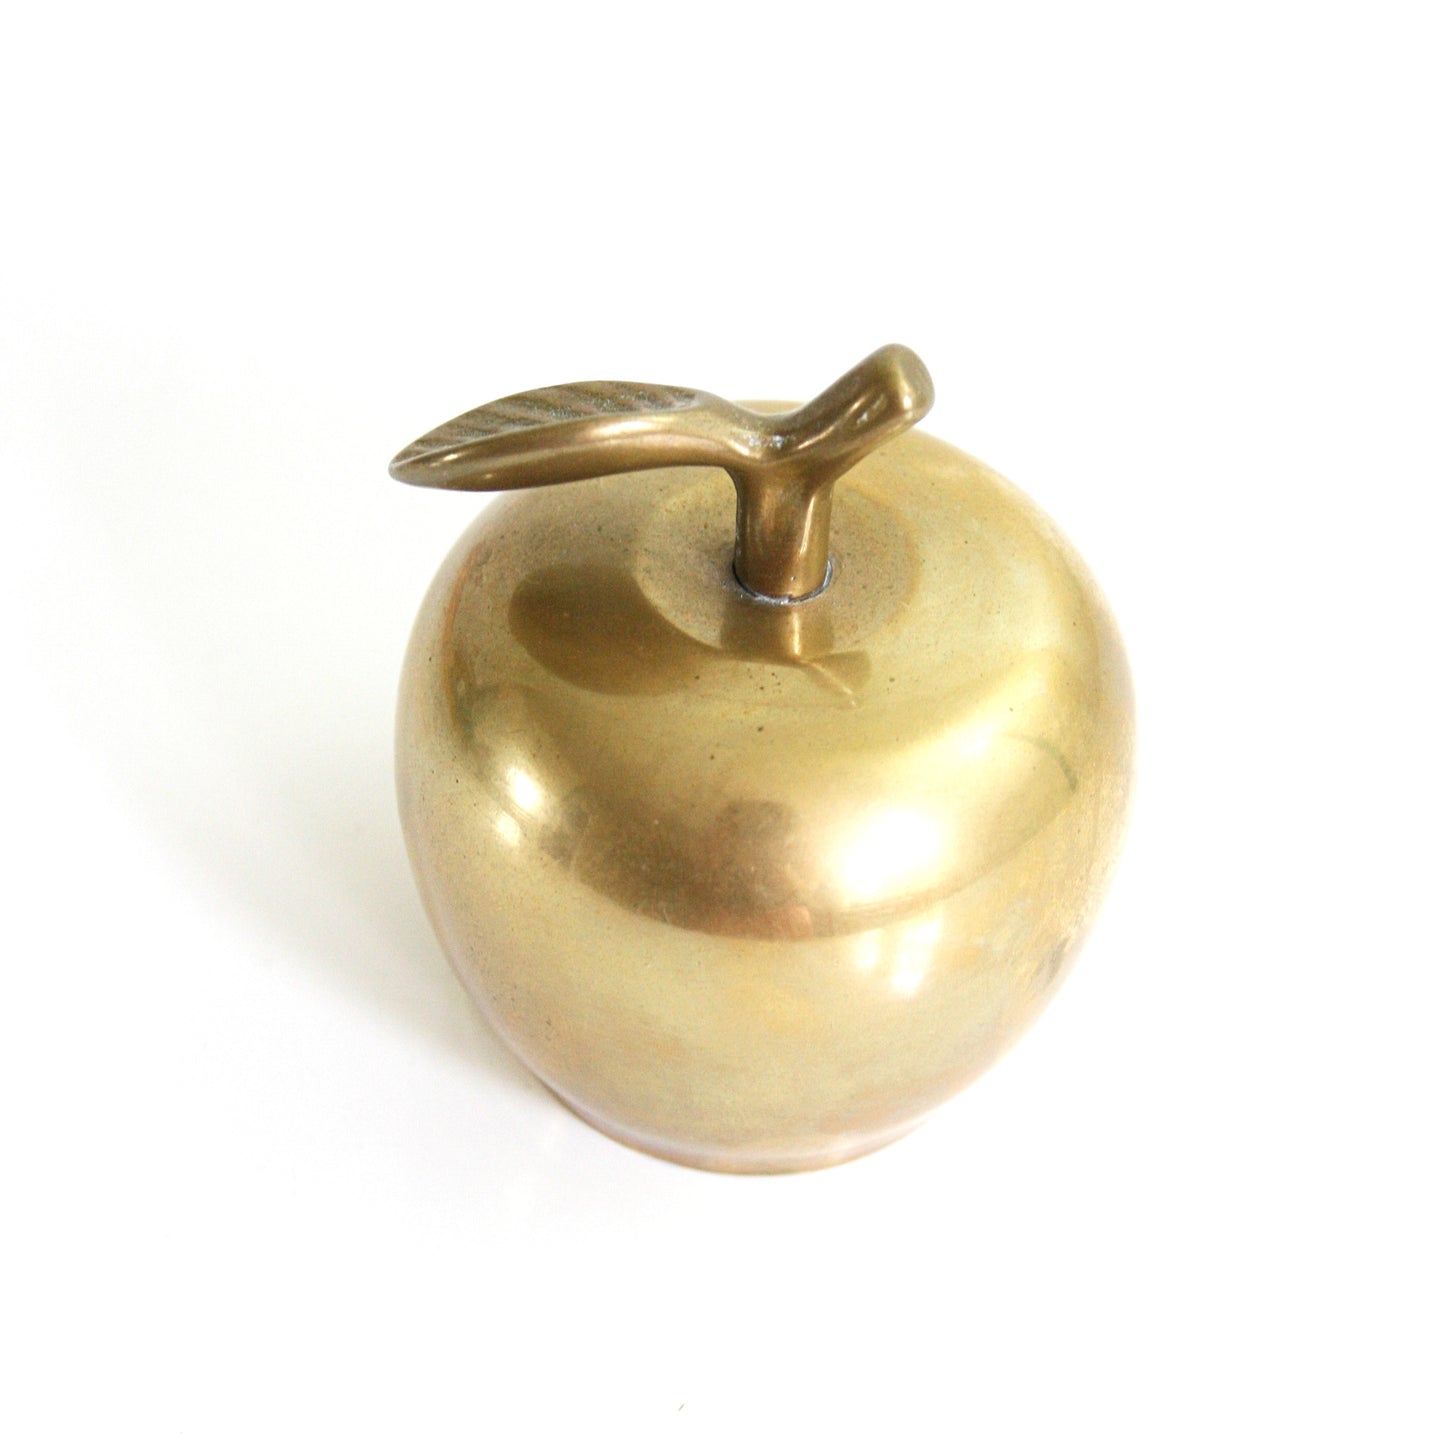 SOLD - Mid Century Brass Apple / Vintage Apple Bell